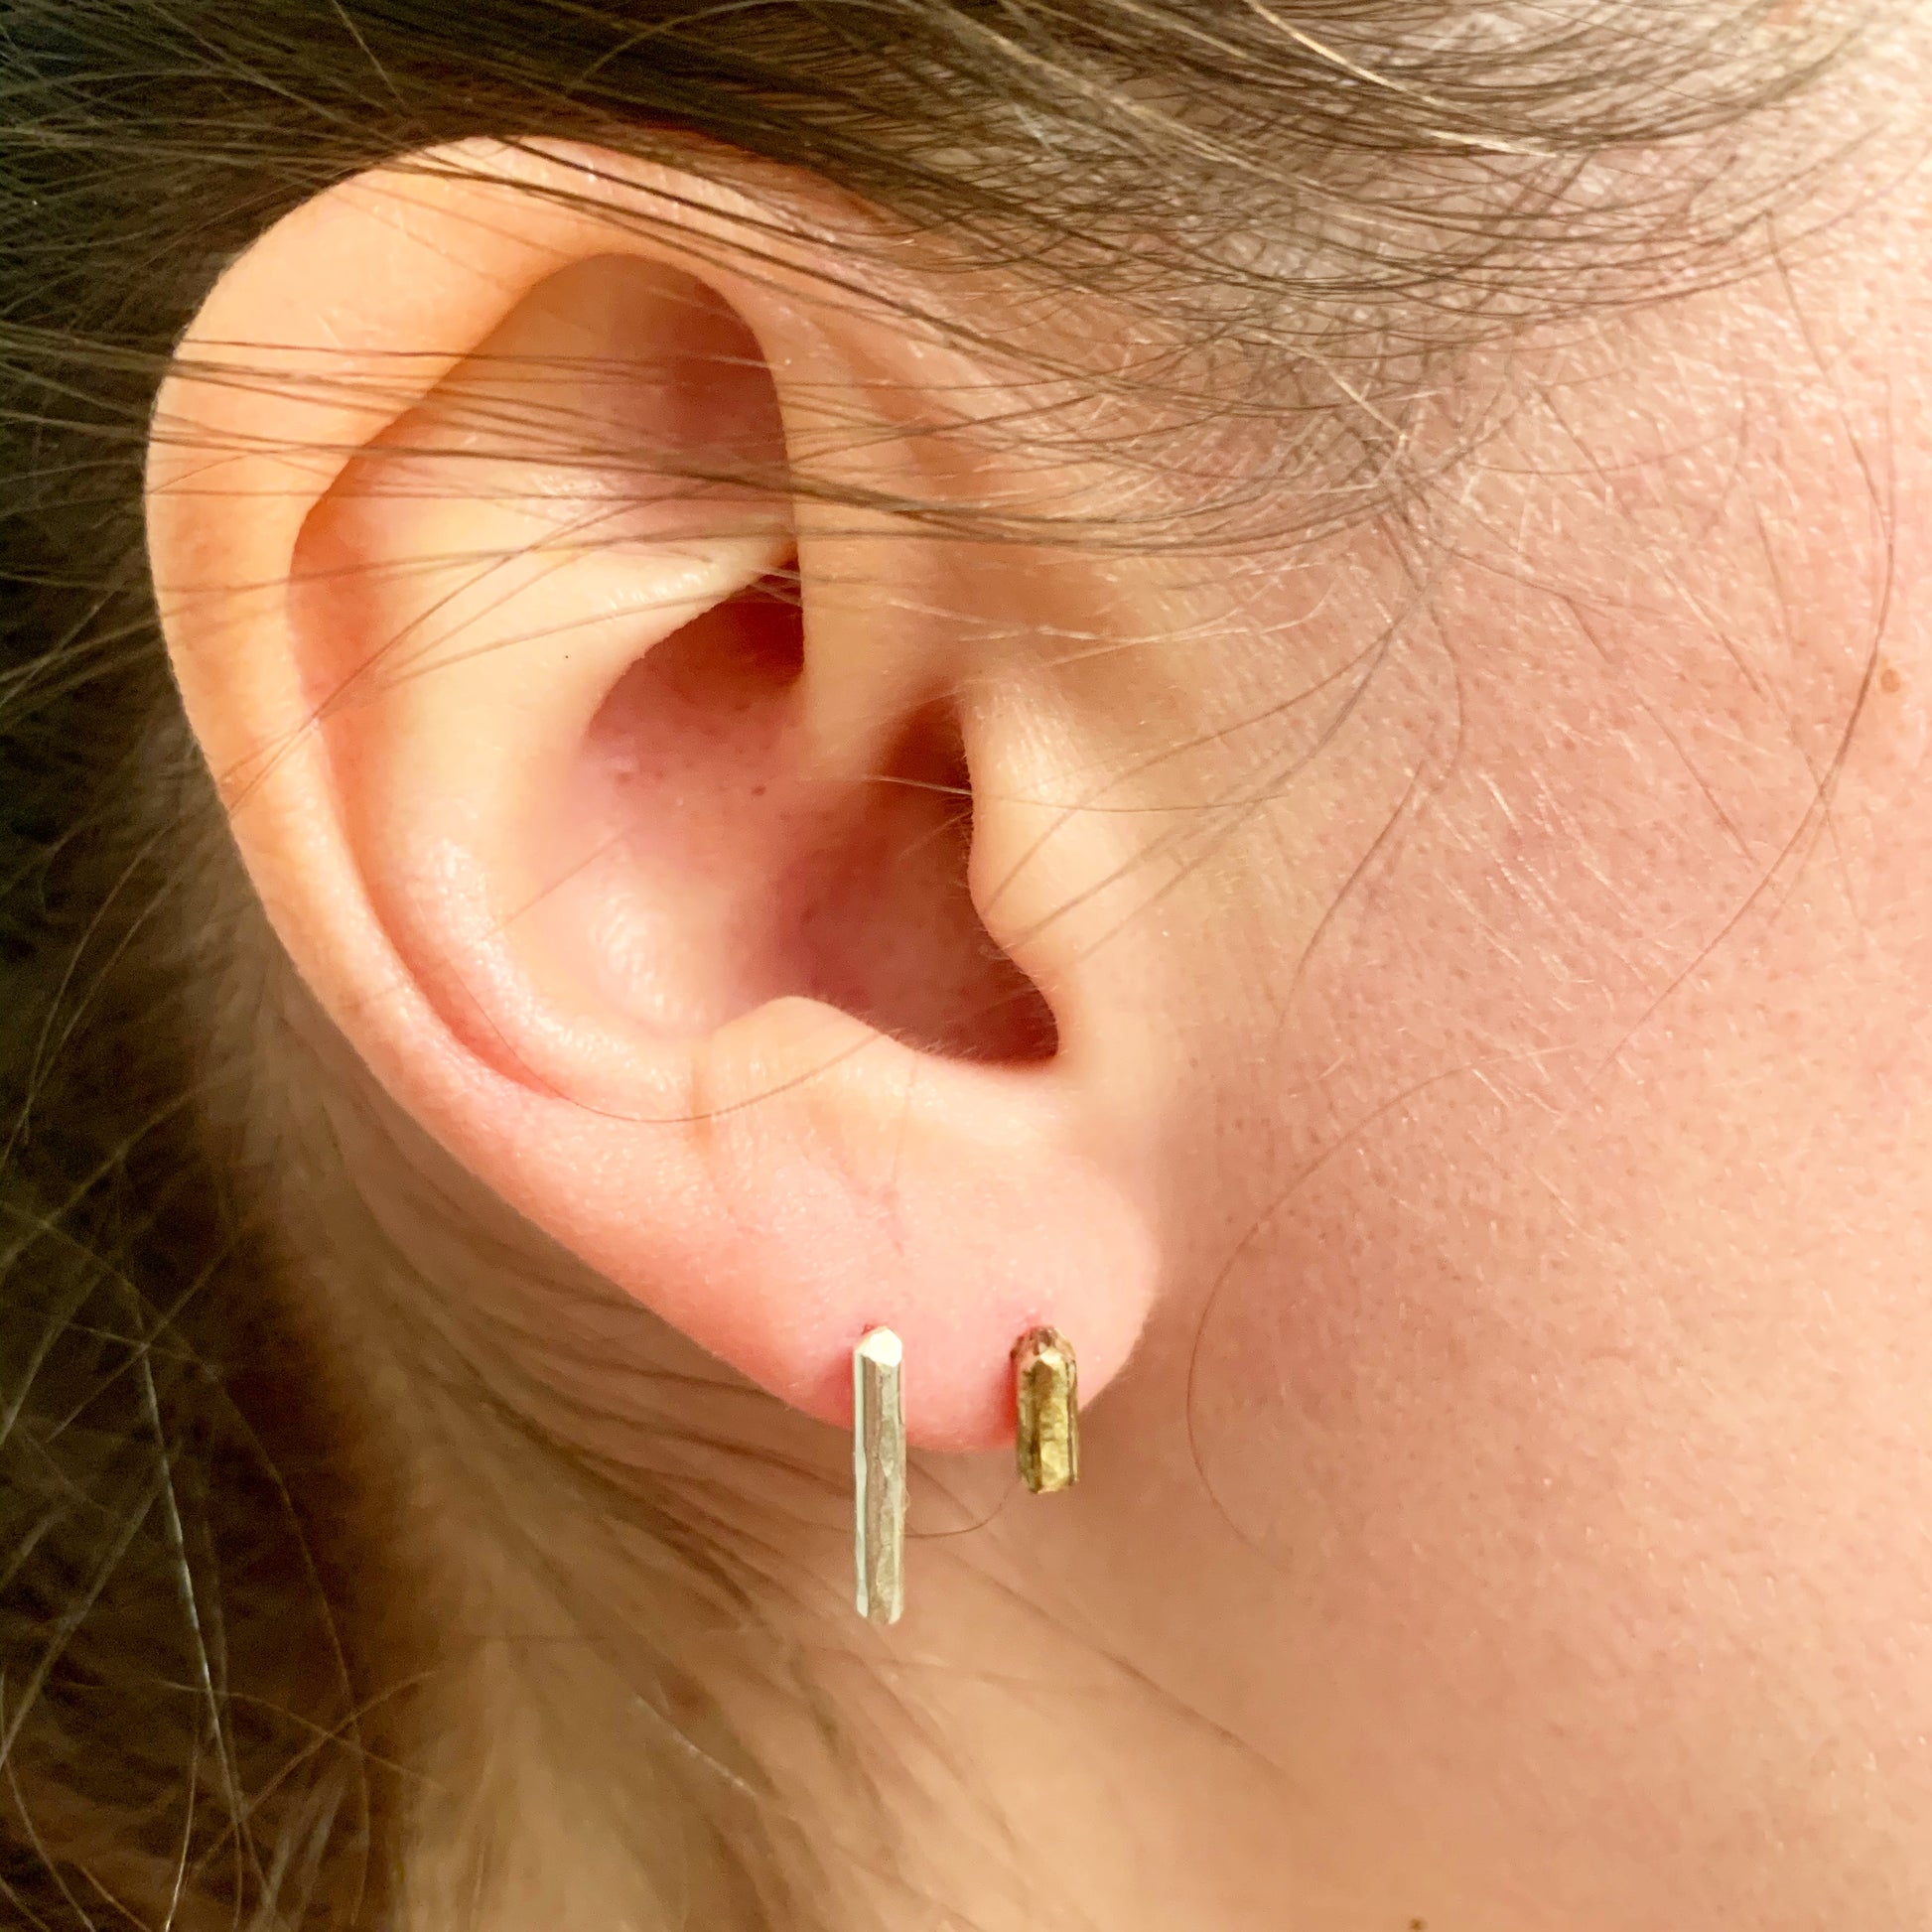 Mini Balance Stud Earrings -1/4" - Jennifer Cervelli Jewelry